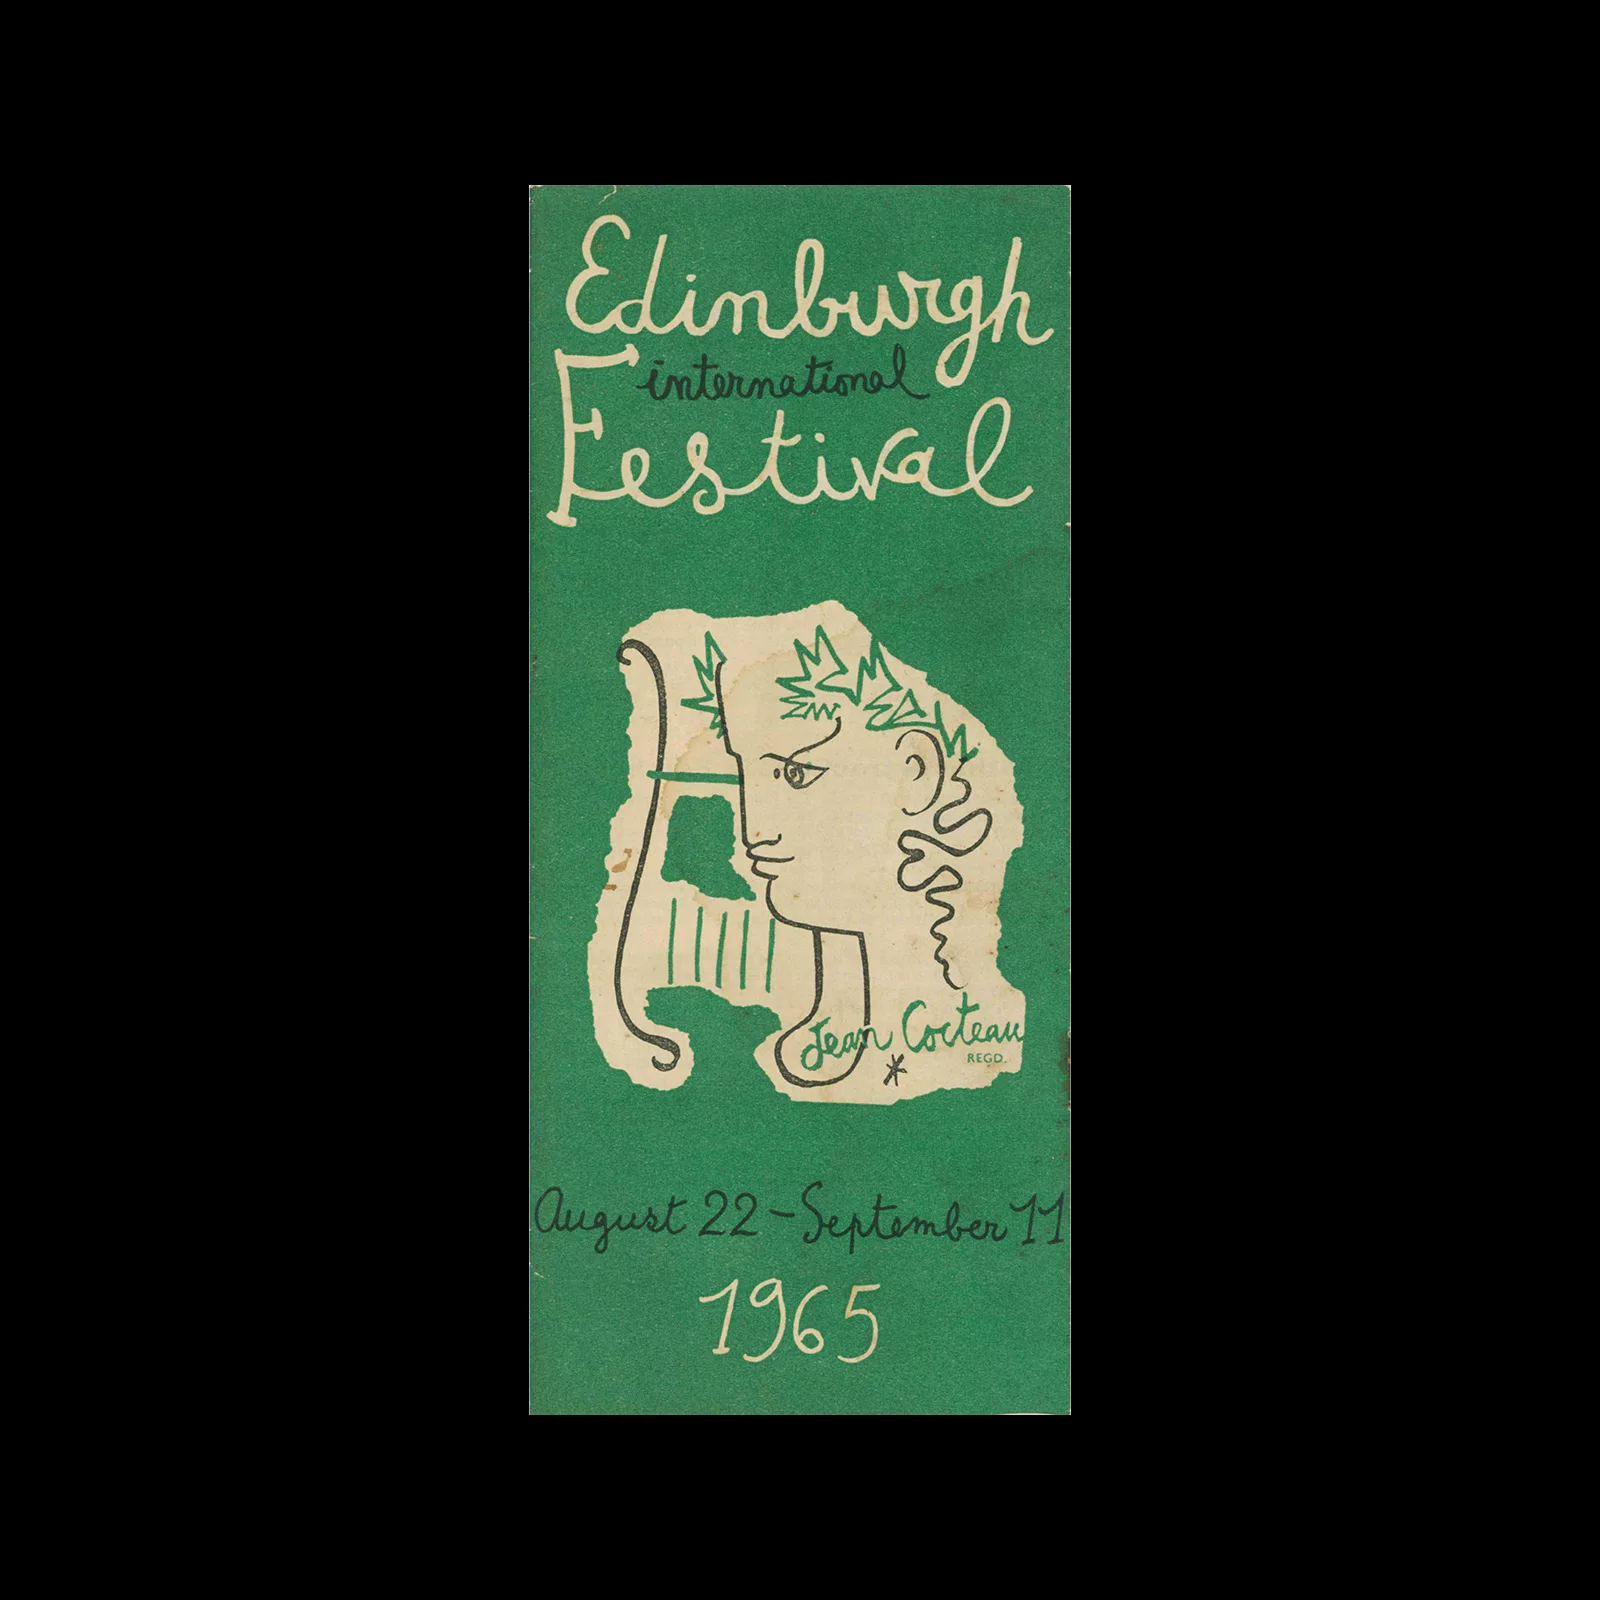 Edinburgh International Festival 1965, Programme Design, 1965. Cover motif by Jean Cocteau